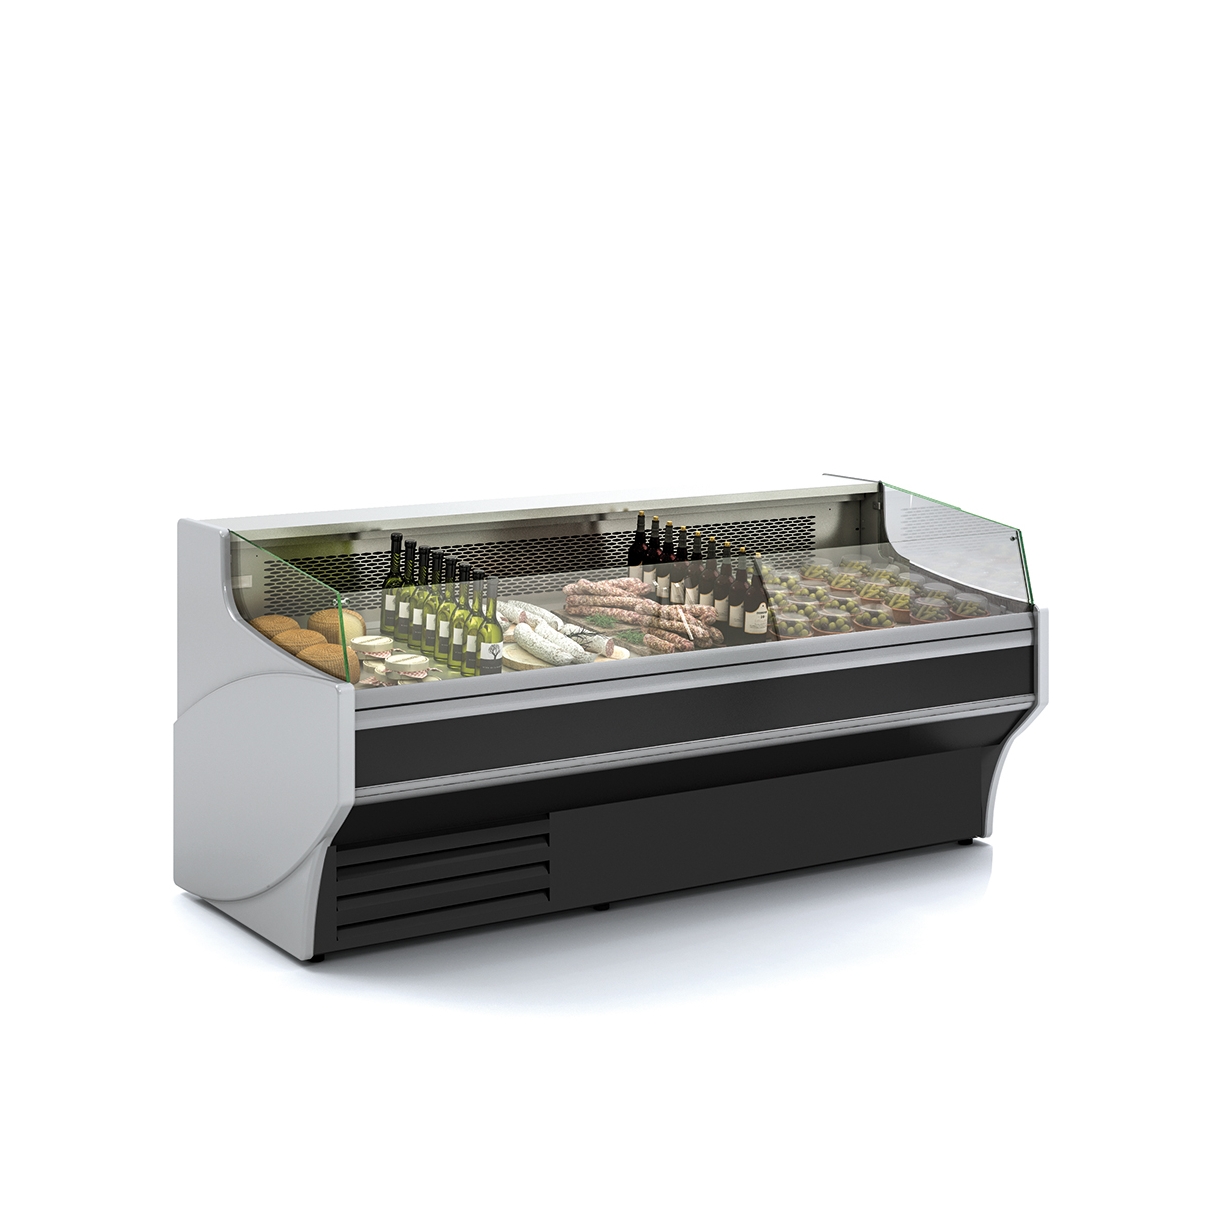 Self-service Refrigerated Display Case VEA-10-TF